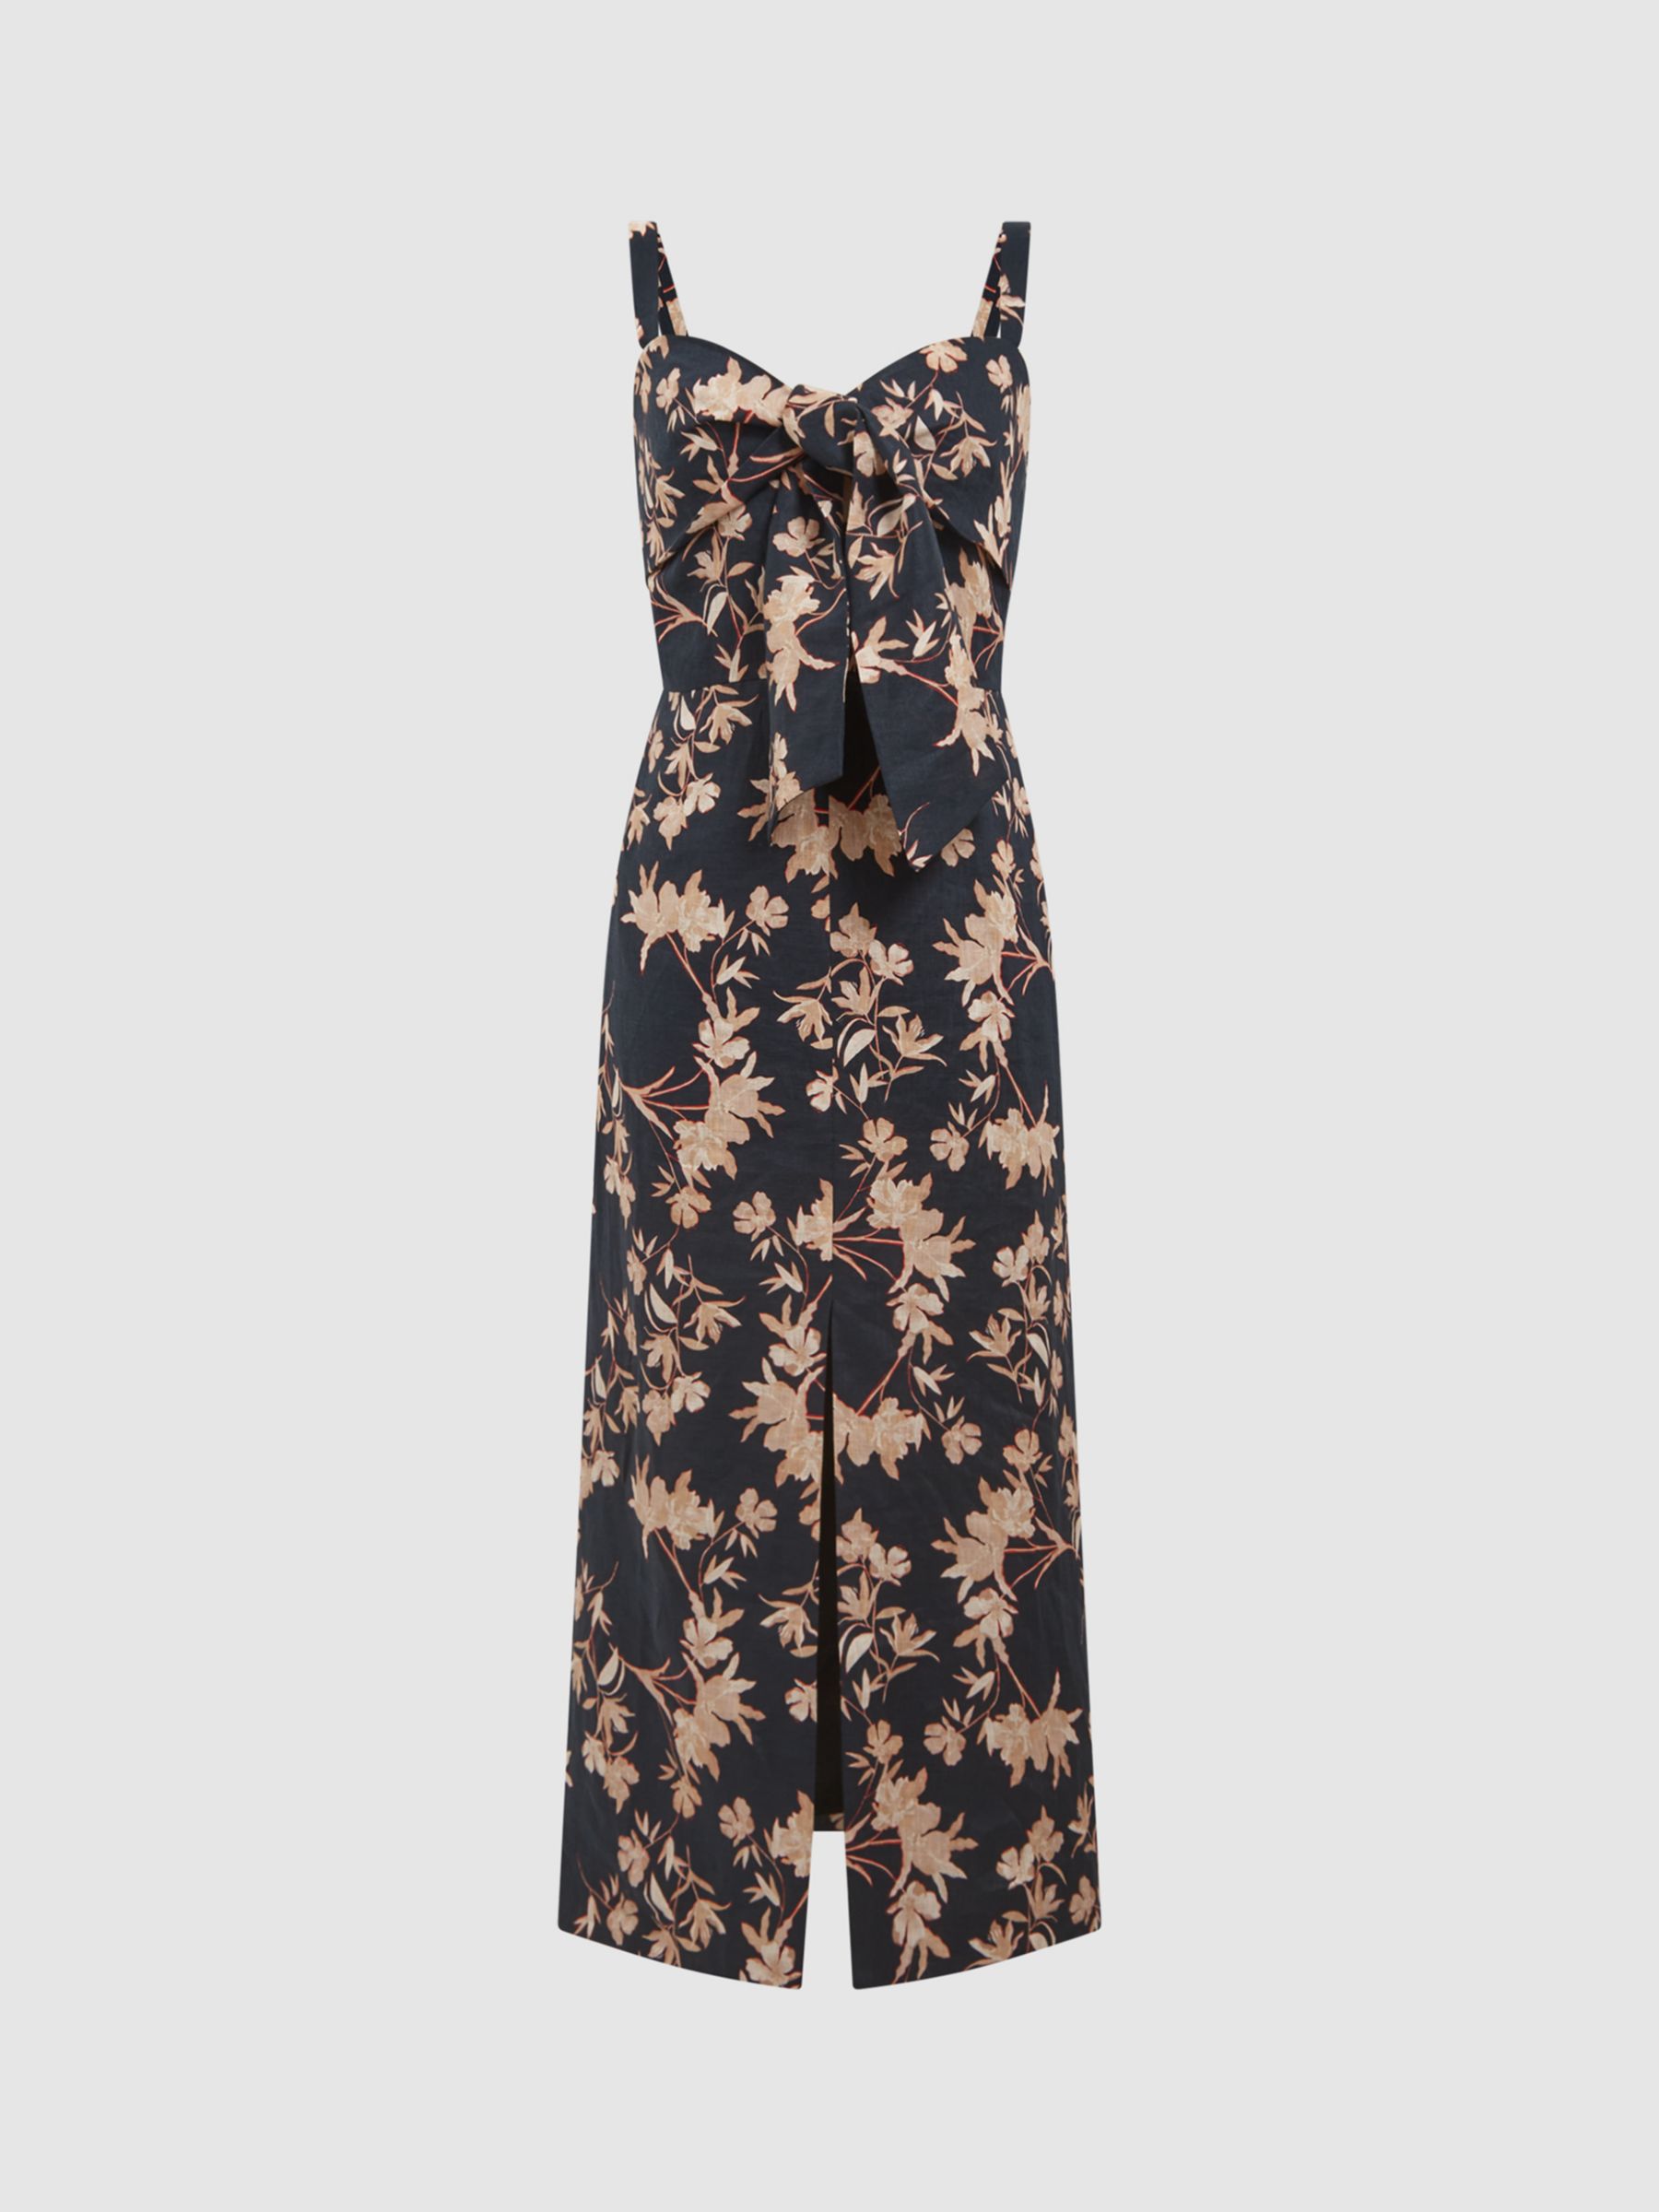 Reiss Aleen Floral Print Linen Midi Dress, Black/Blush at John Lewis ...